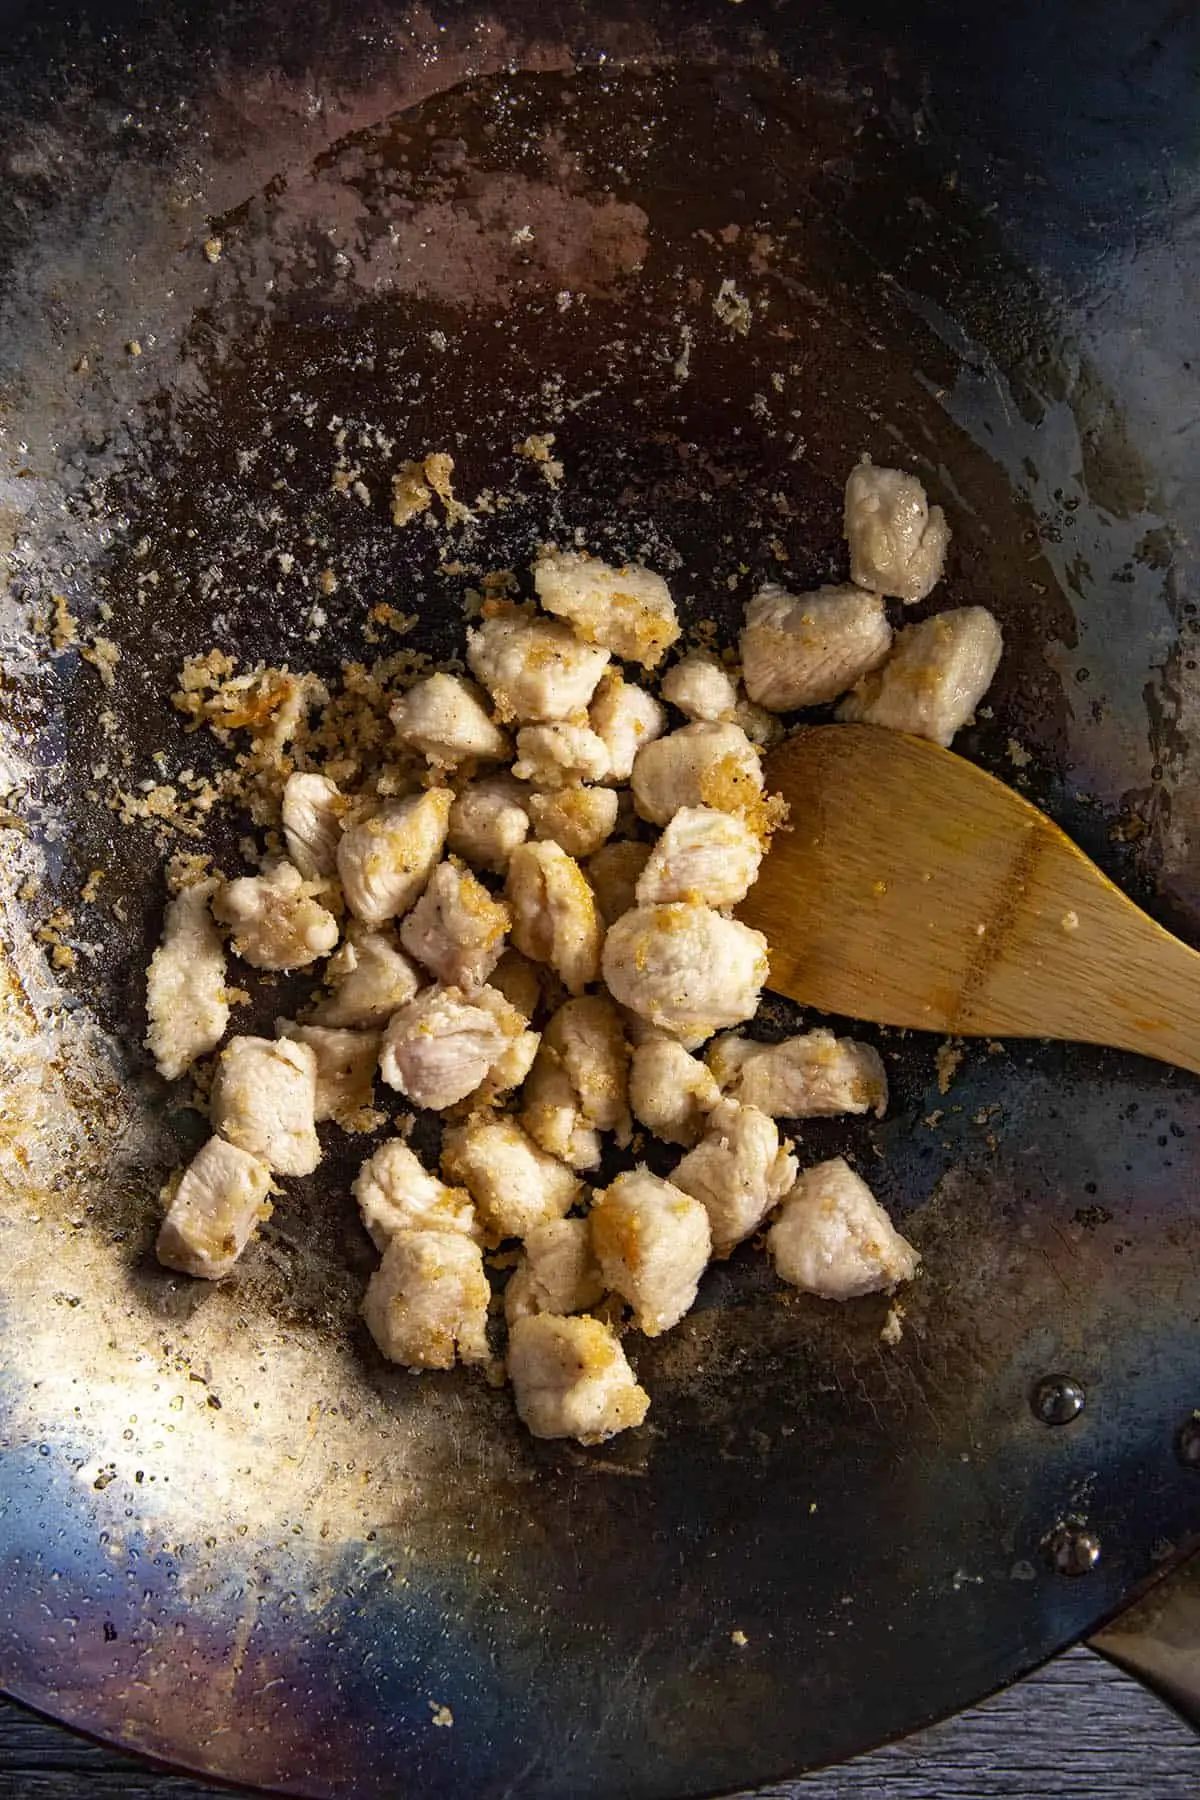 Stir frying the chicken in the wok to make General Tsos Chicken